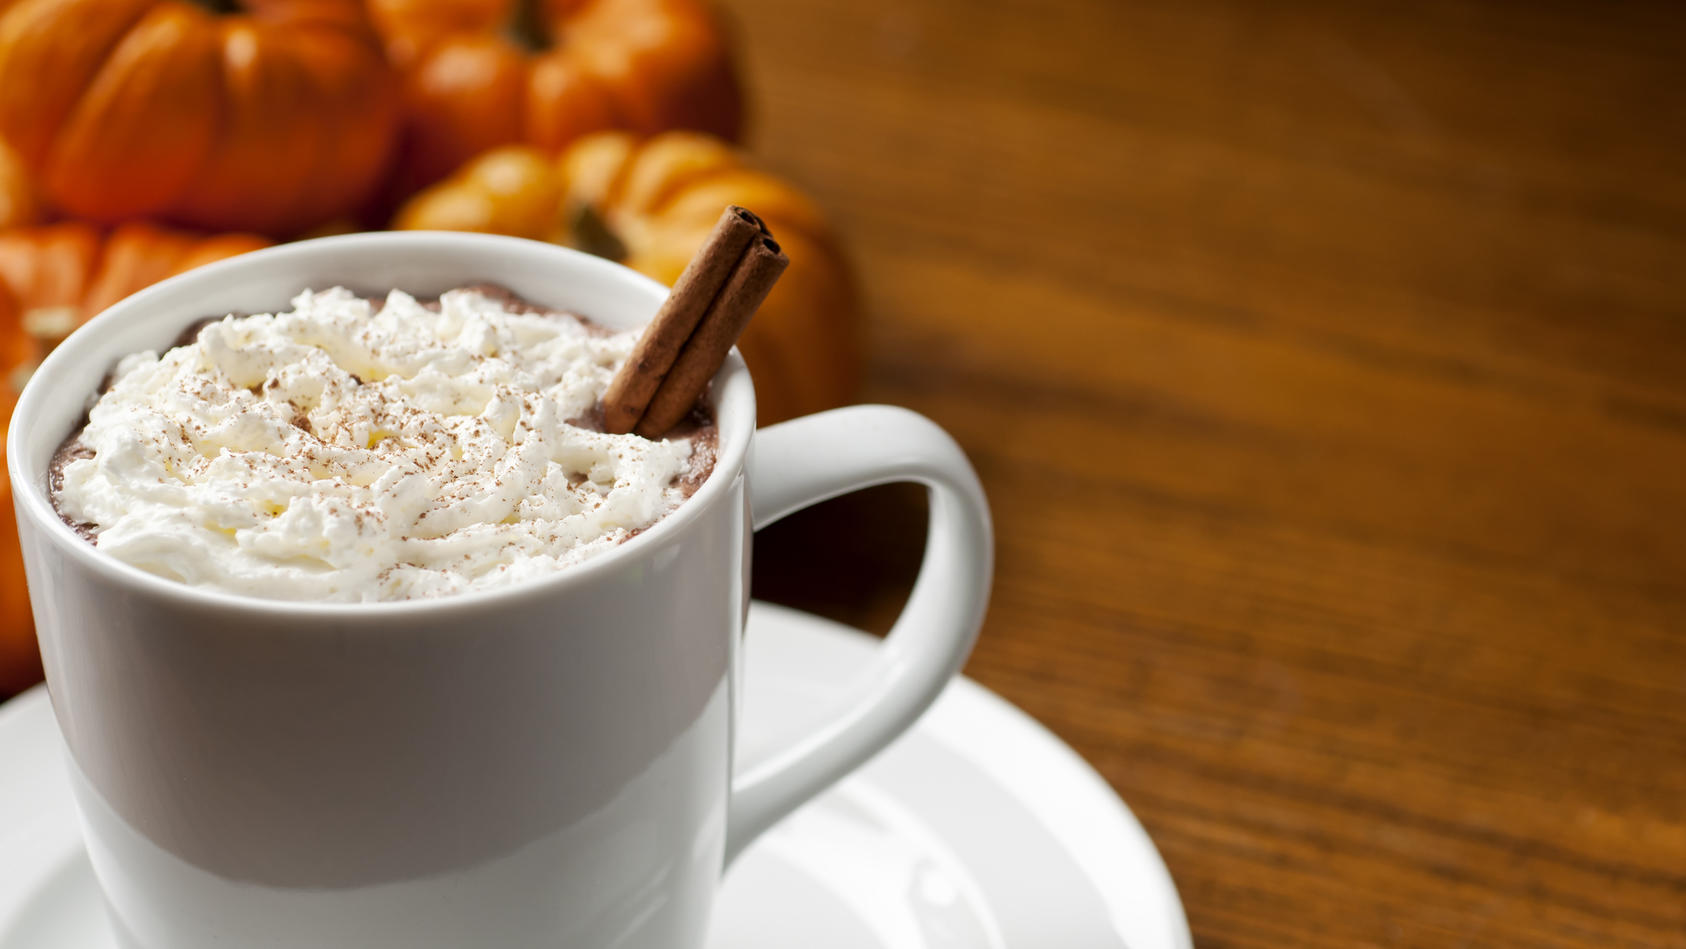 kalorienarm-und-proteinreich-rezept-fur-pumpkin-spice-latte-light